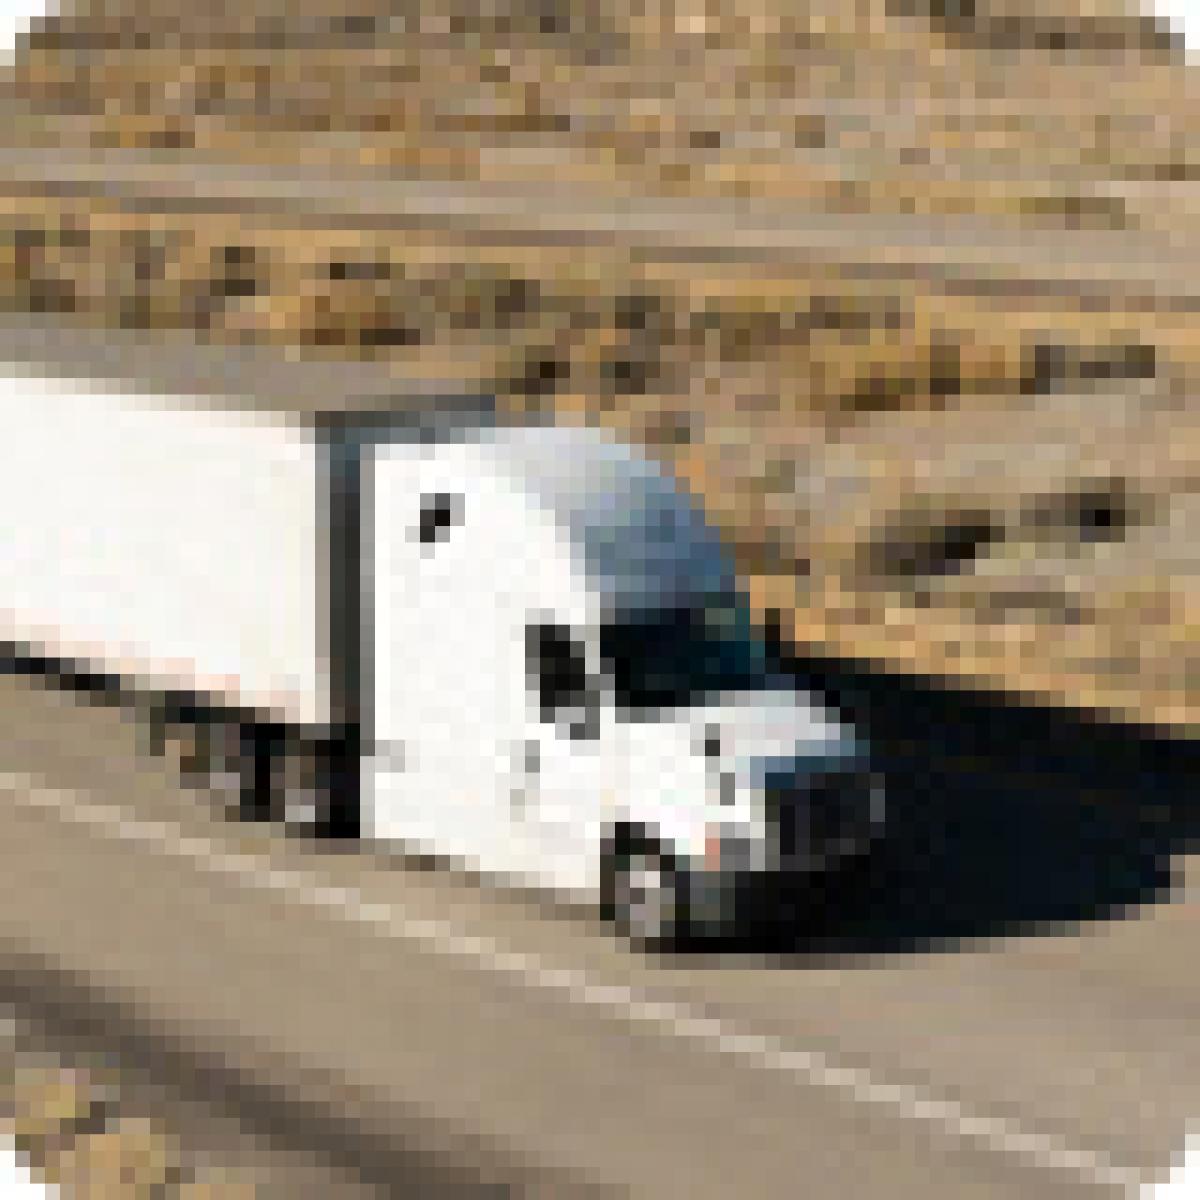 Momento Renovar flota de vehiculos - Camion blanco circulando por la carretera rodeado de campo